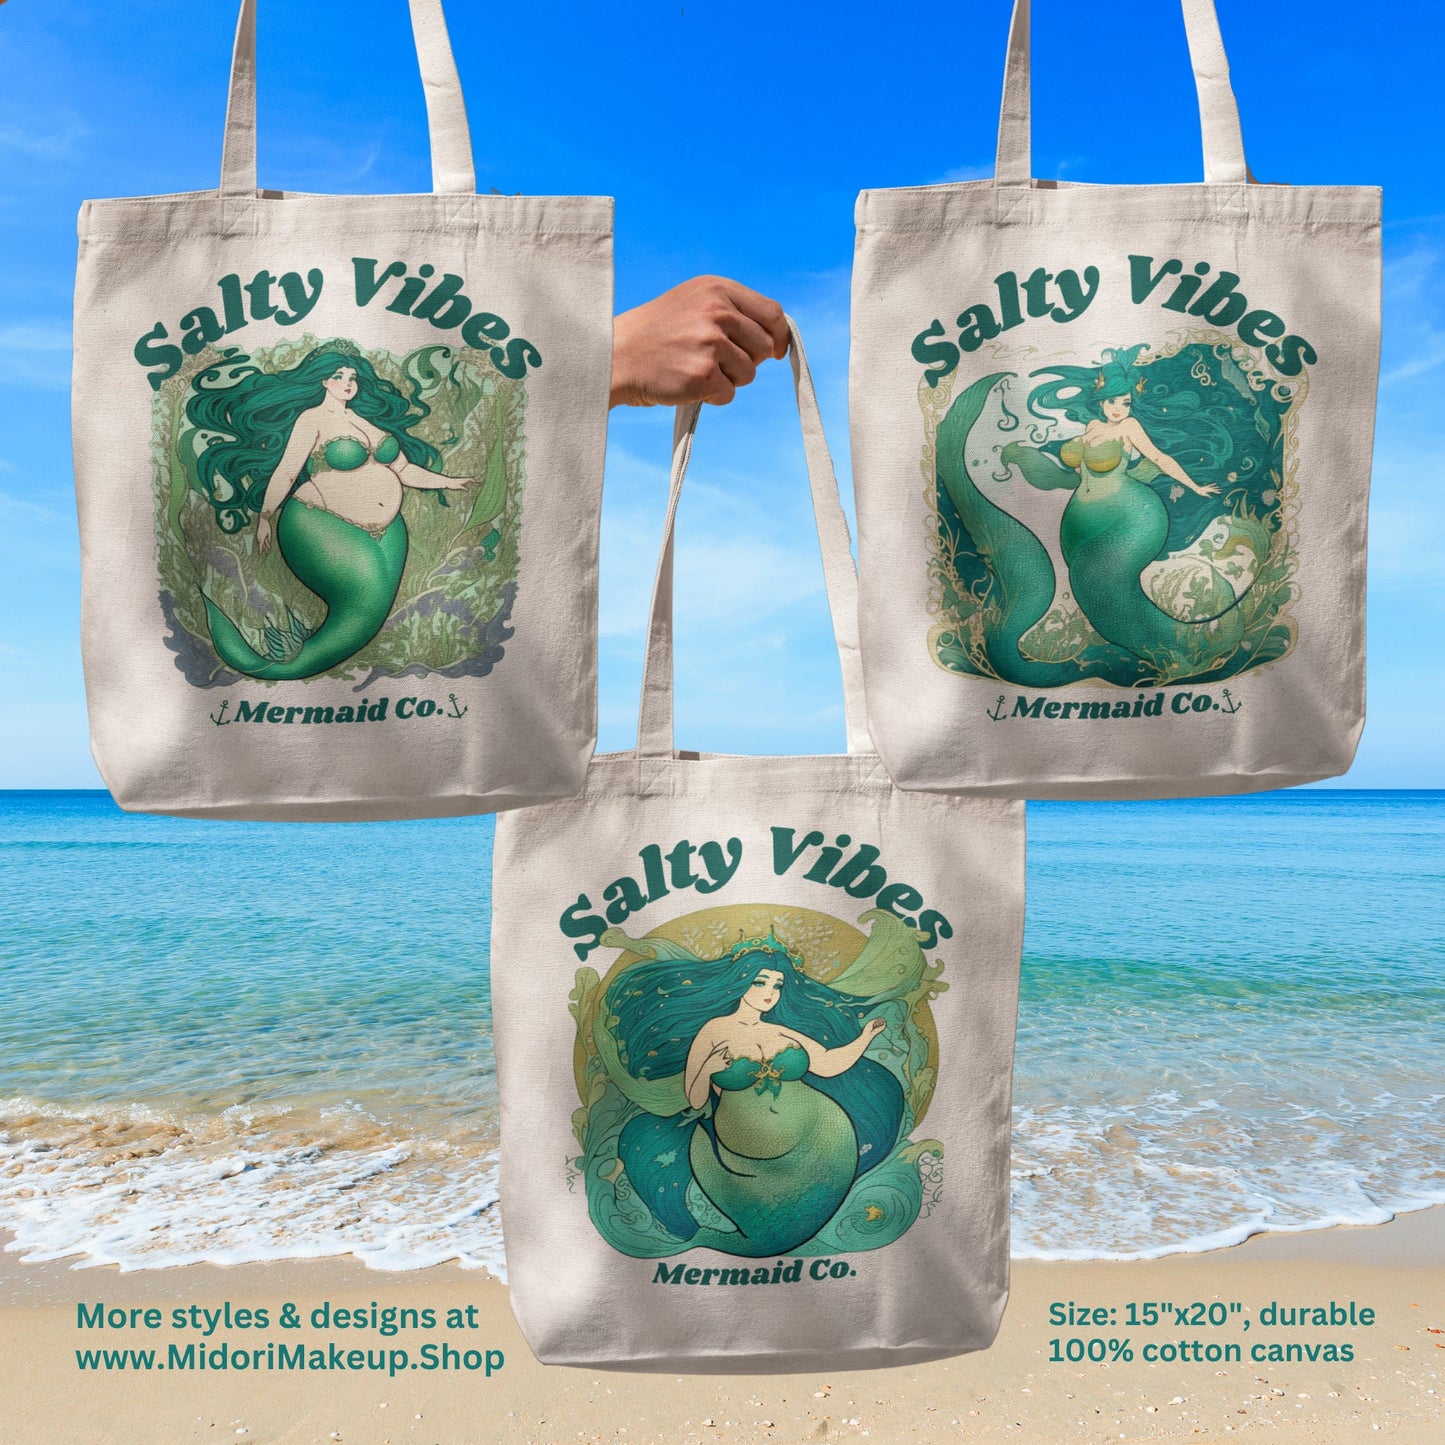 Mermaid Tote Gift Bag Reusable Canvas Tote Swag Bag Beach Gift Bridal Bachelorette Party Travel Tote Stay Salty Vibes Blue Mermaid Bag Set 2